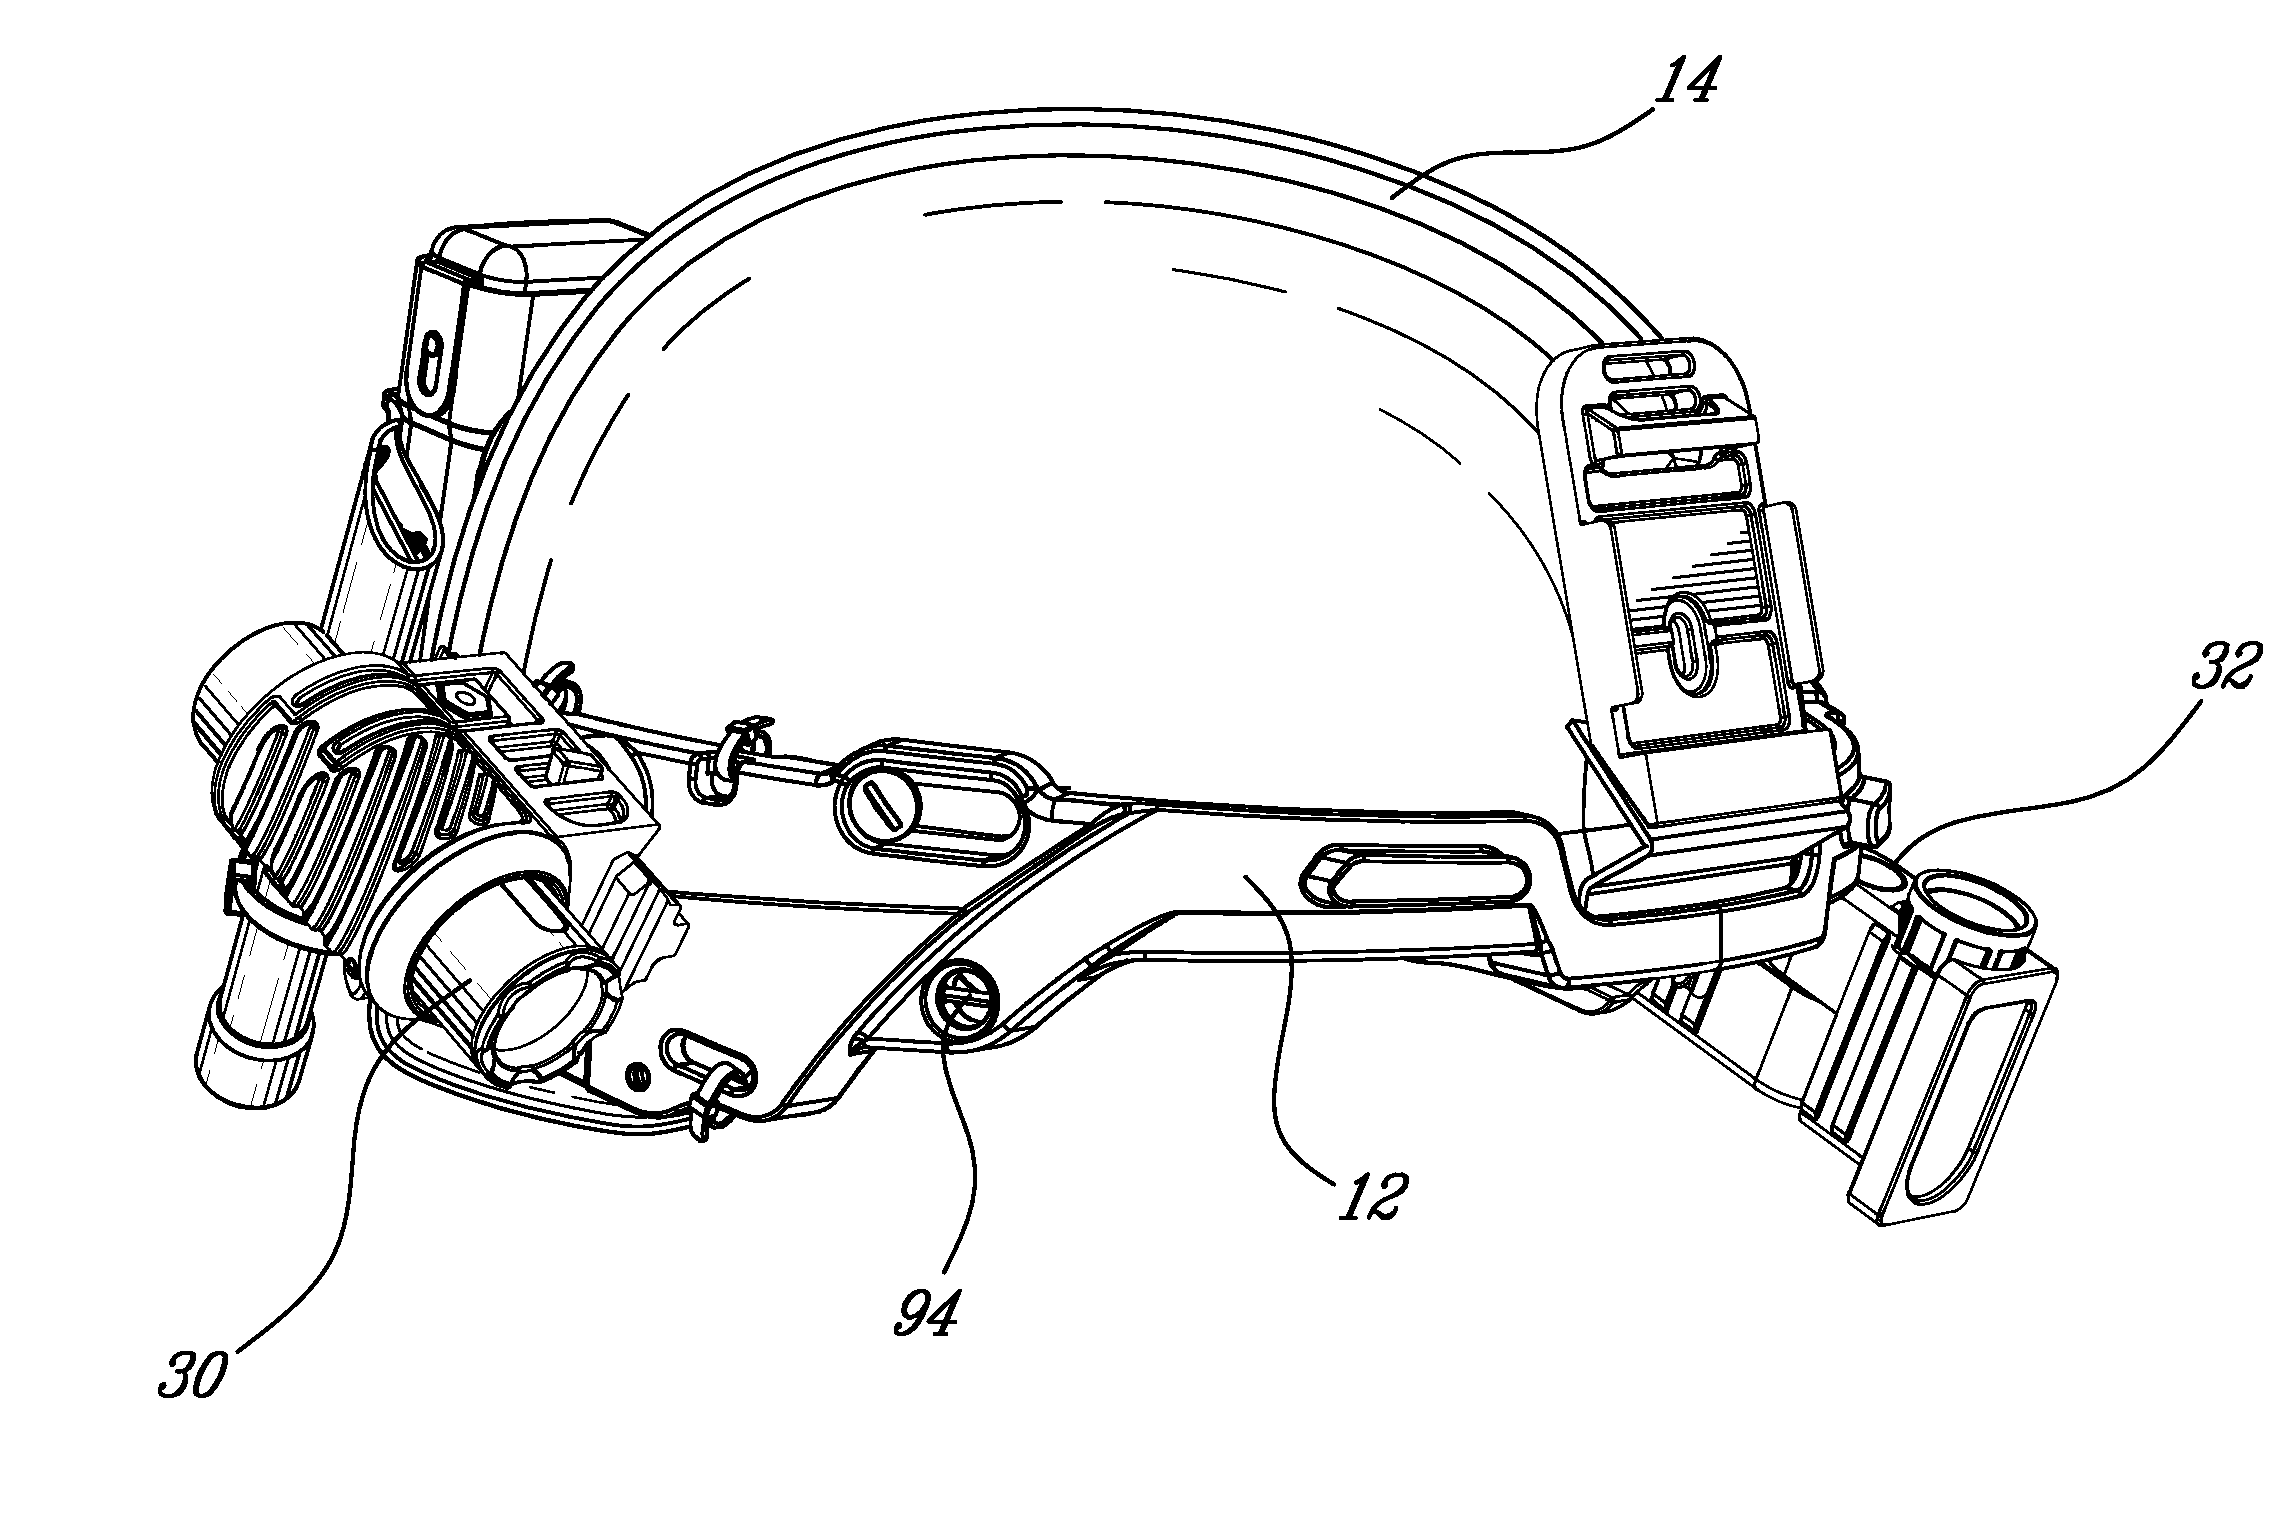 Adaptor platform for helmet